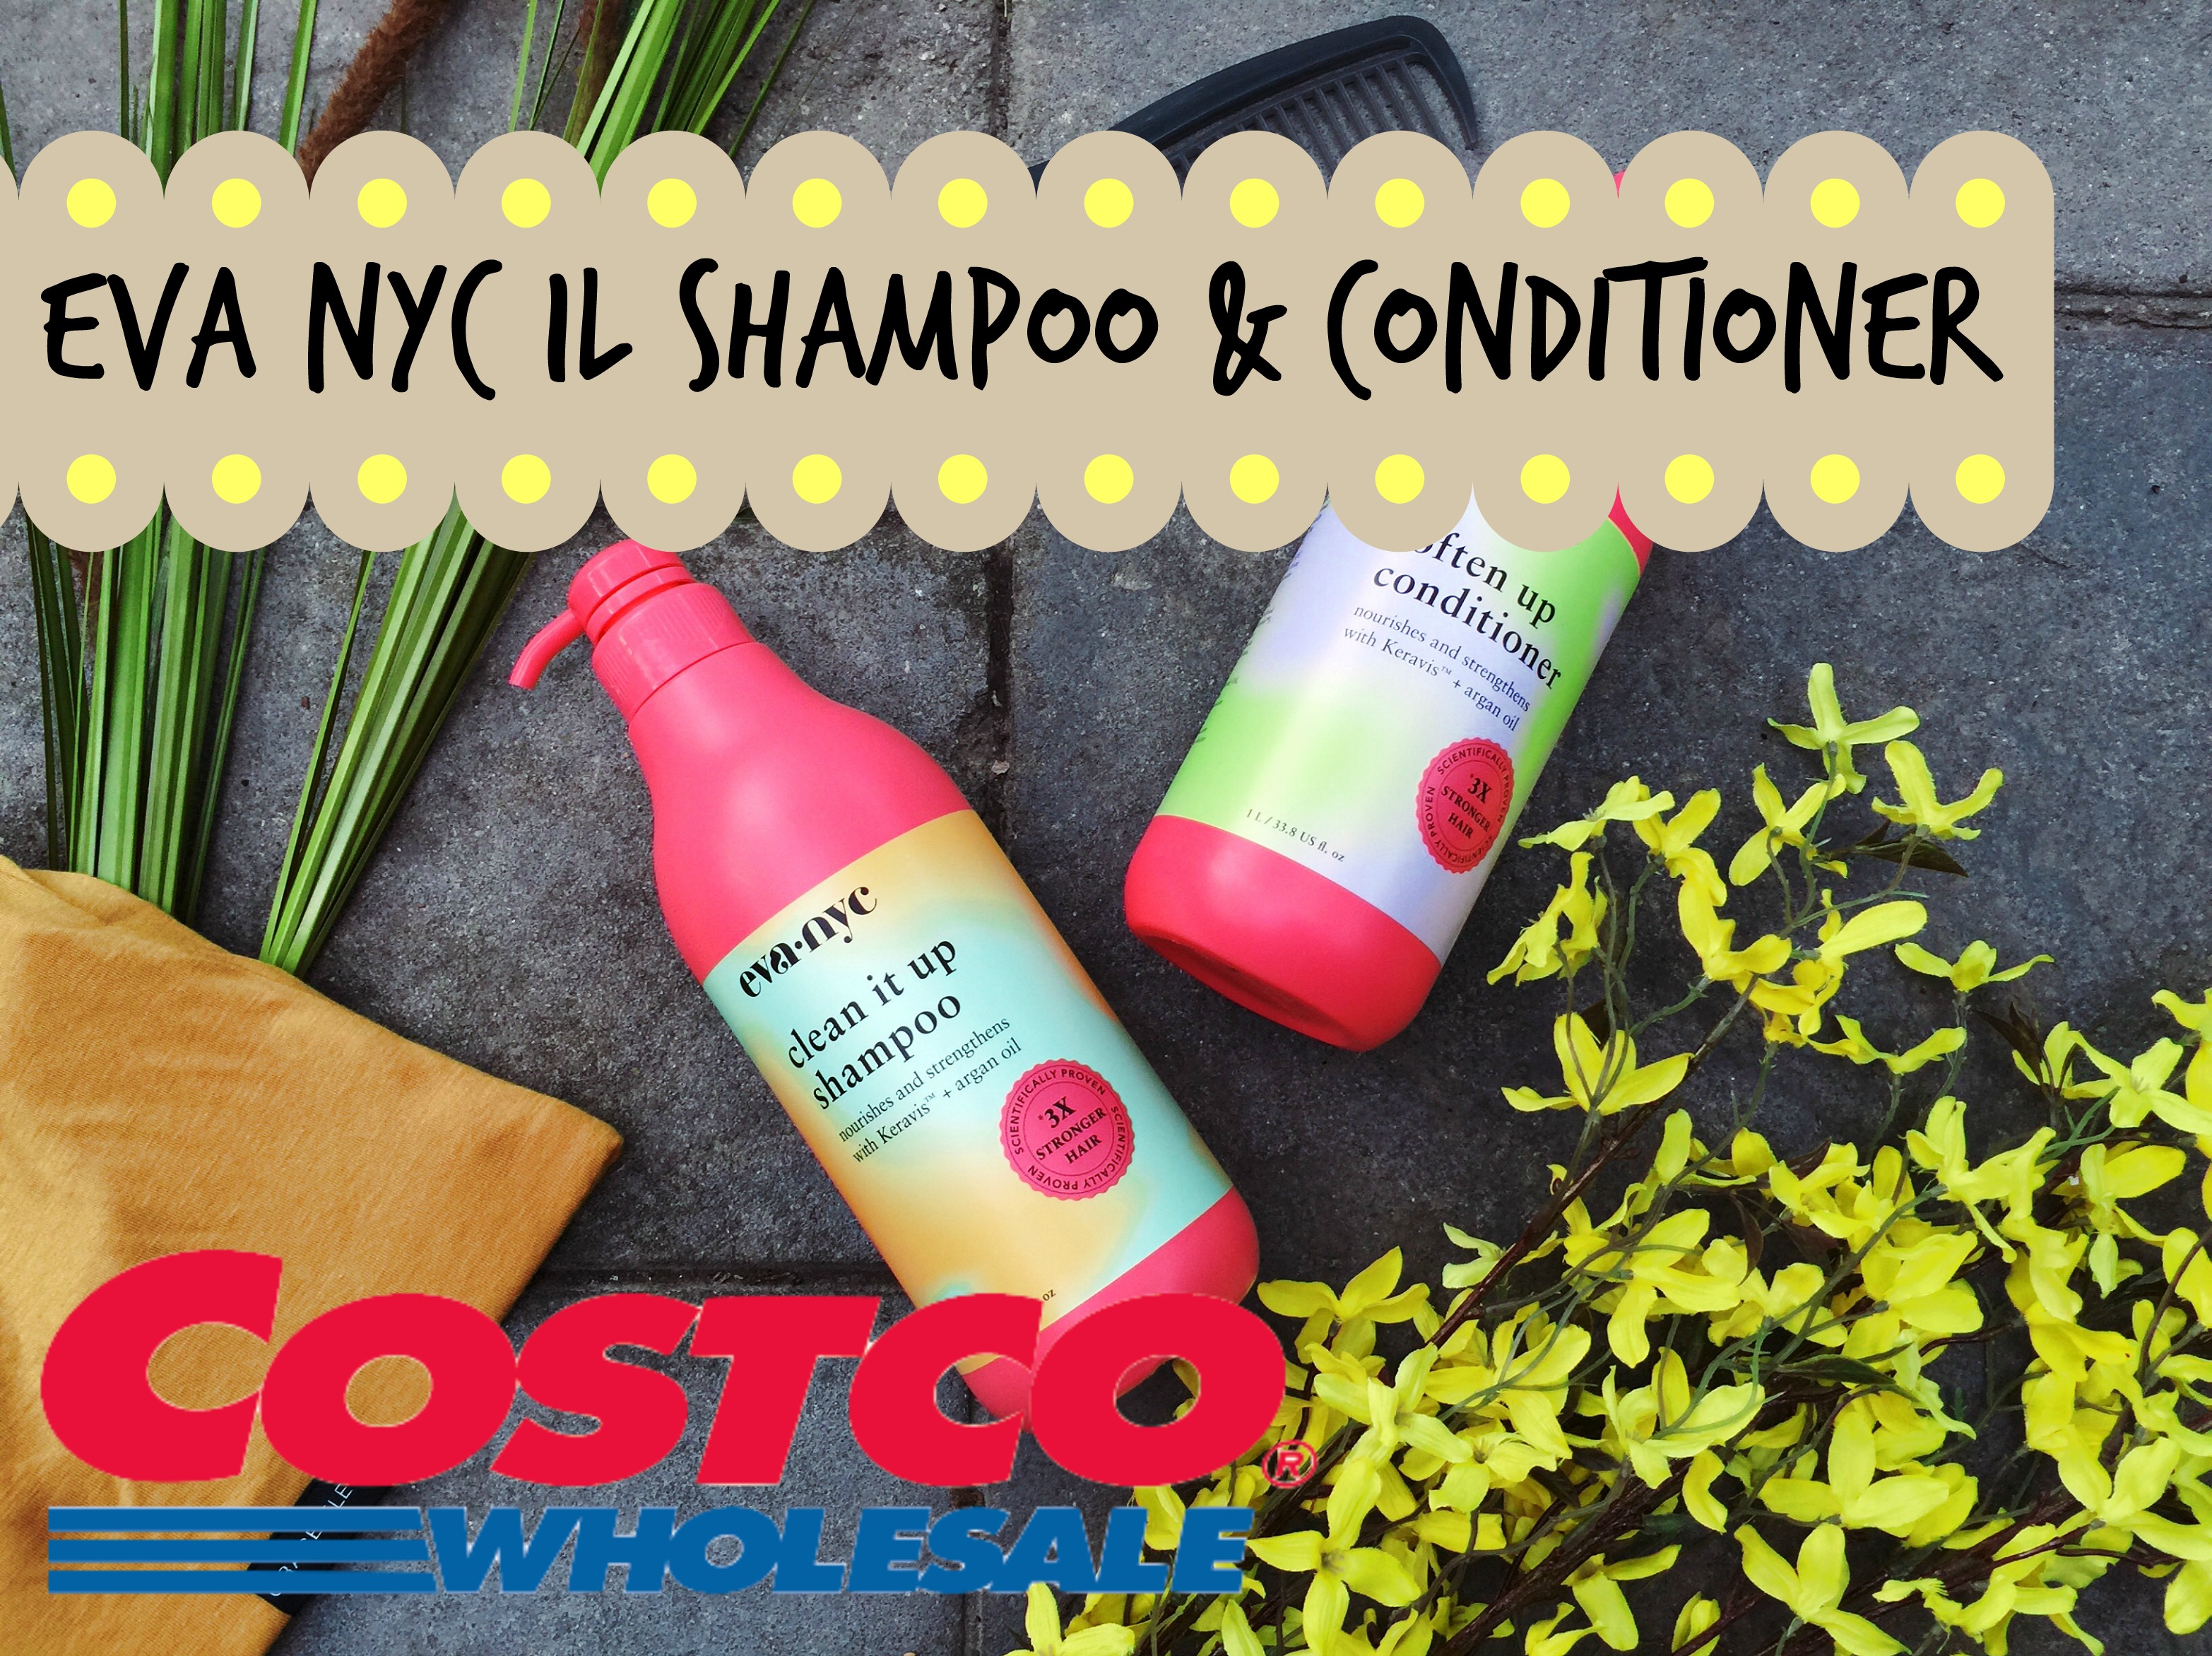 eva nyc shampoo and conditioner at costco